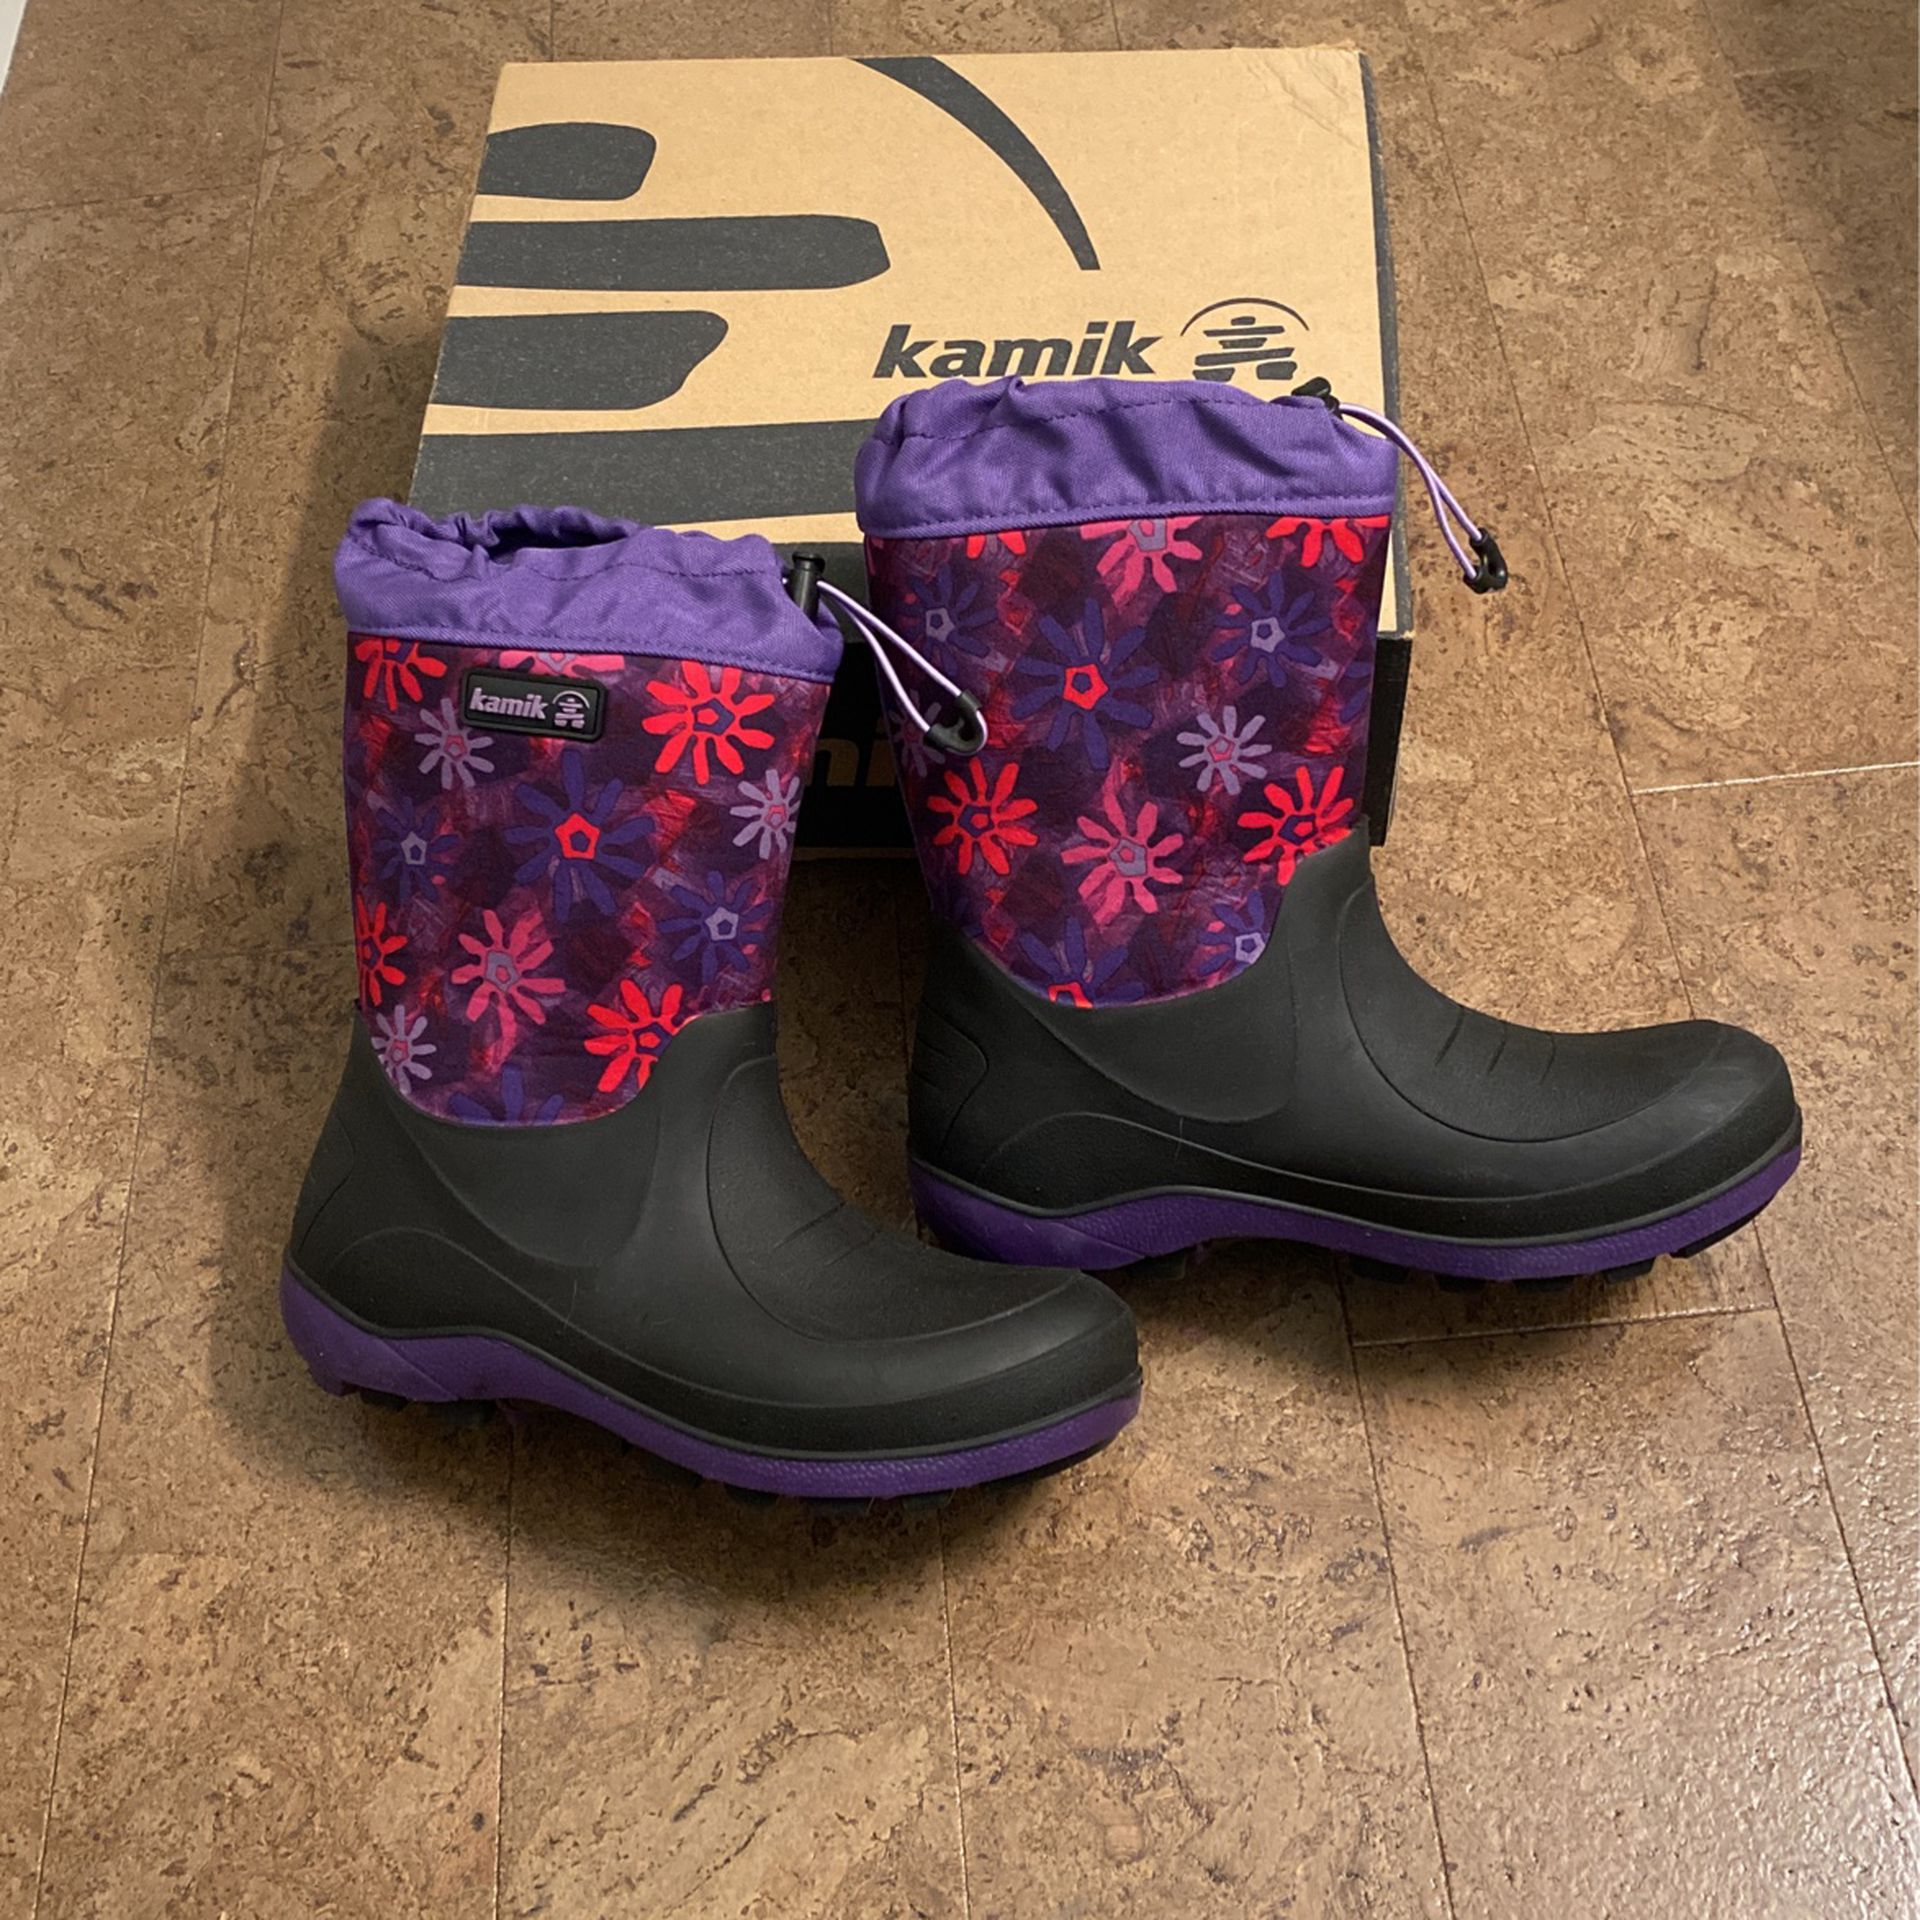 NEW Kamik Women’s Snow / Rain Boots